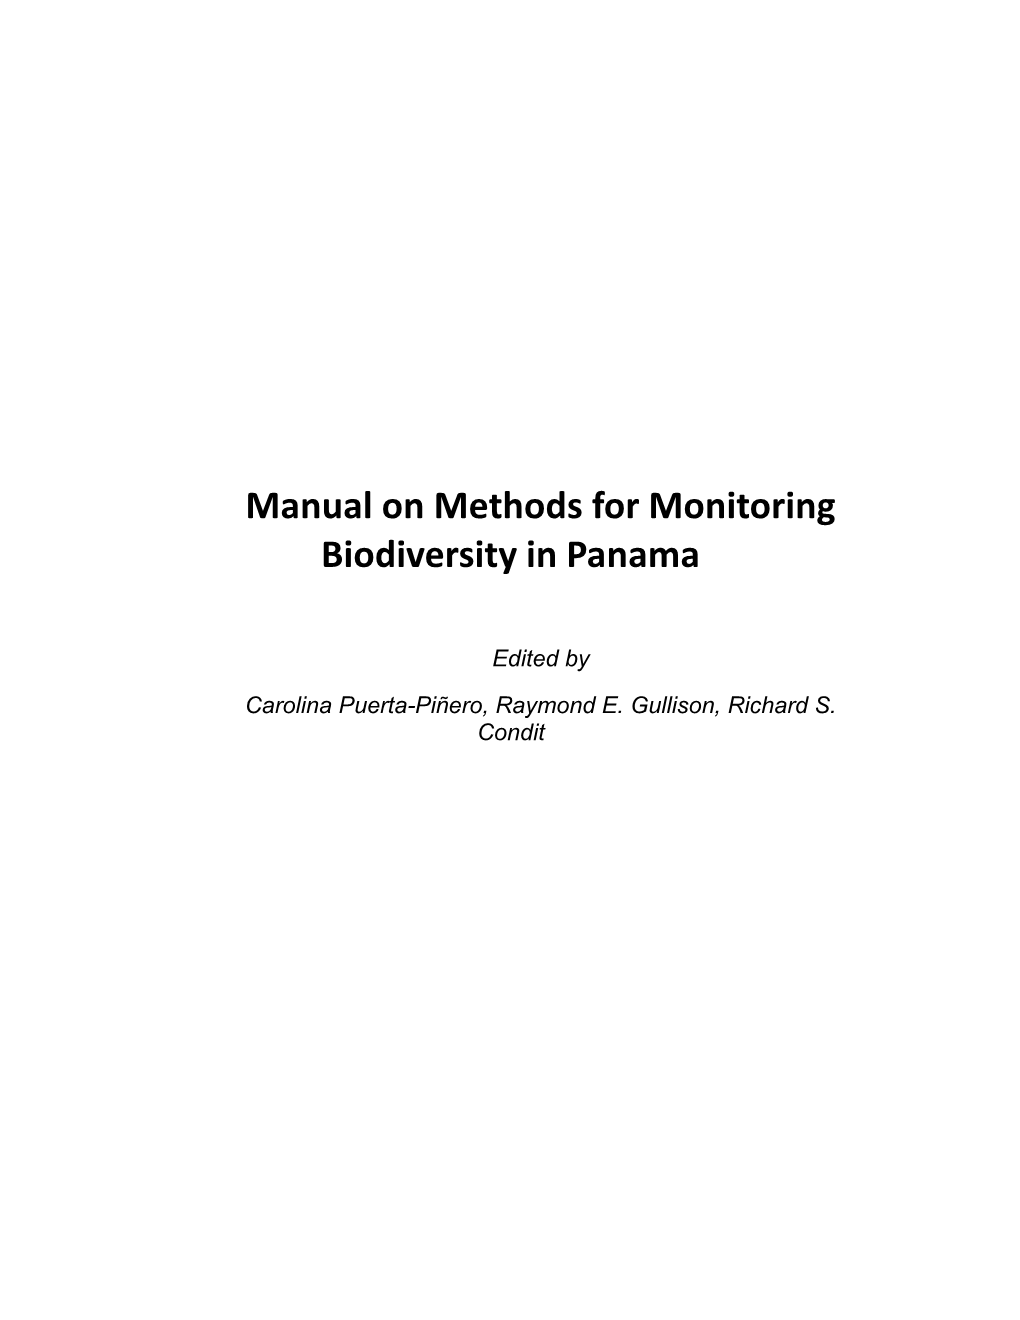 Manual on Methods for Monitoring Biodiversity in Panama